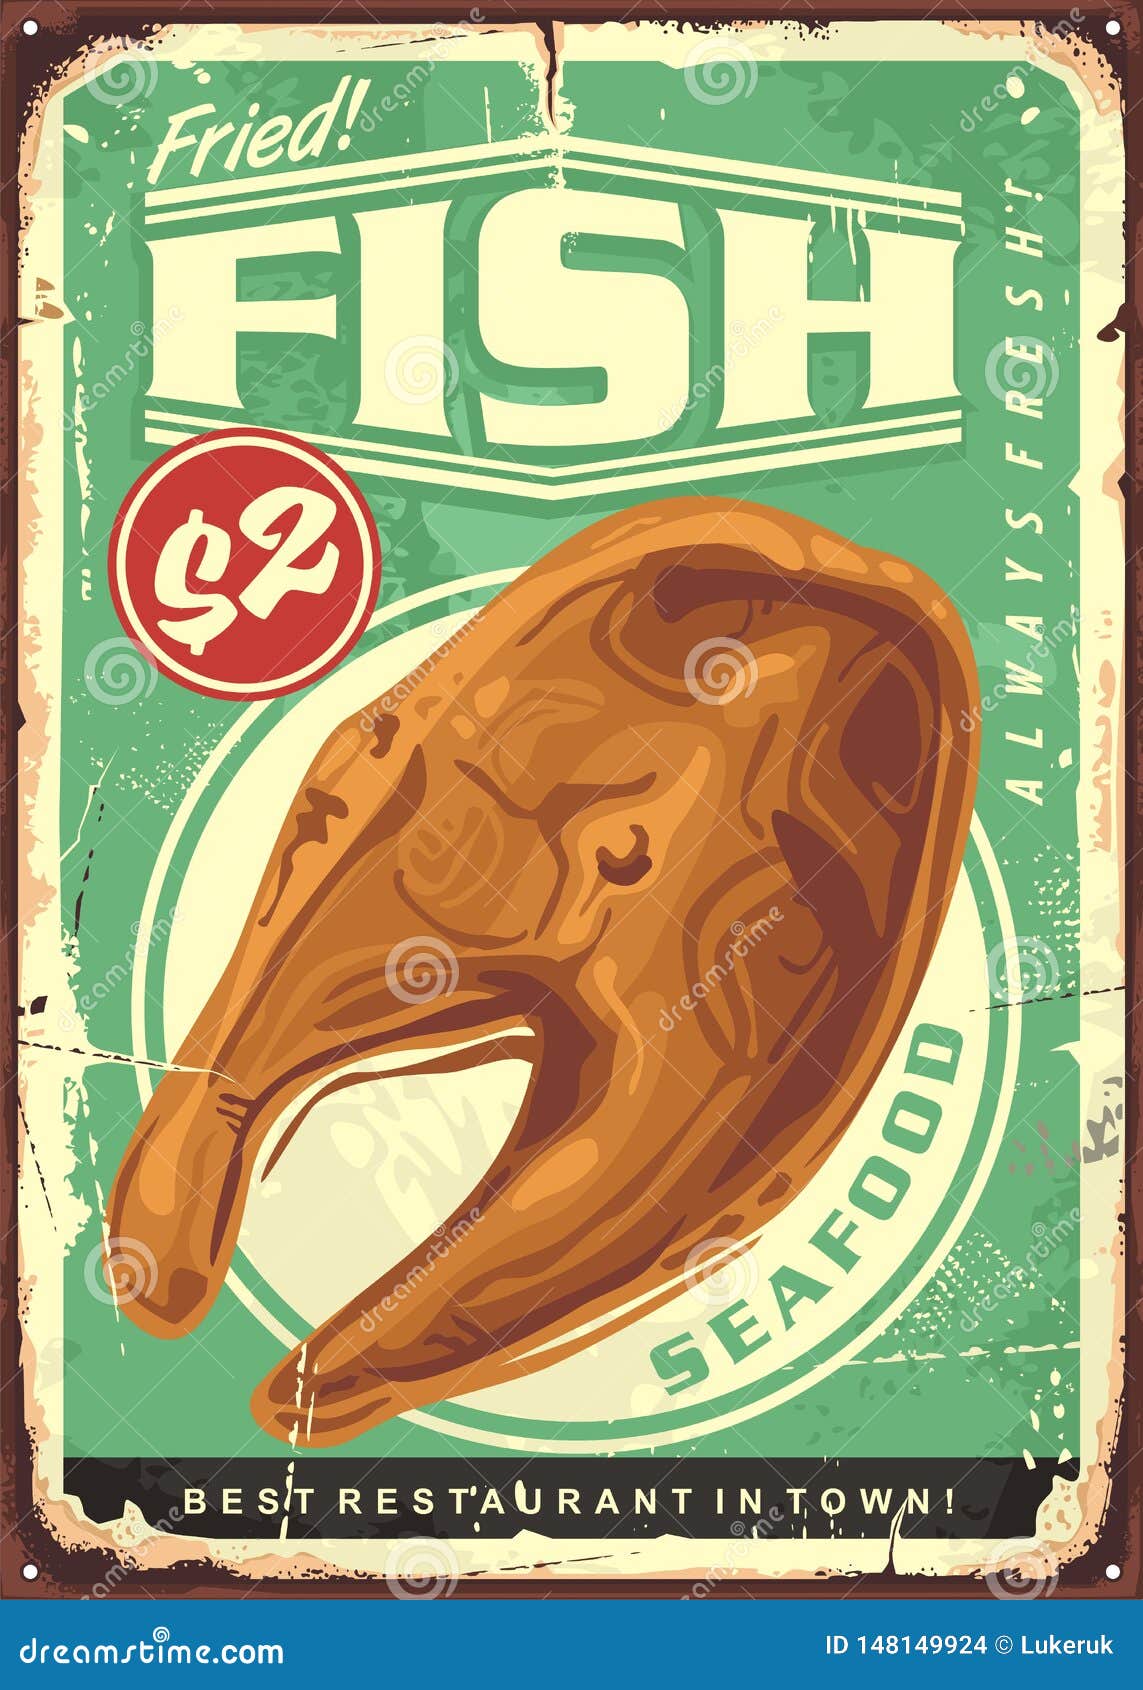 Cod Fish Steak Stock Illustrations – 289 Cod Fish Steak Stock